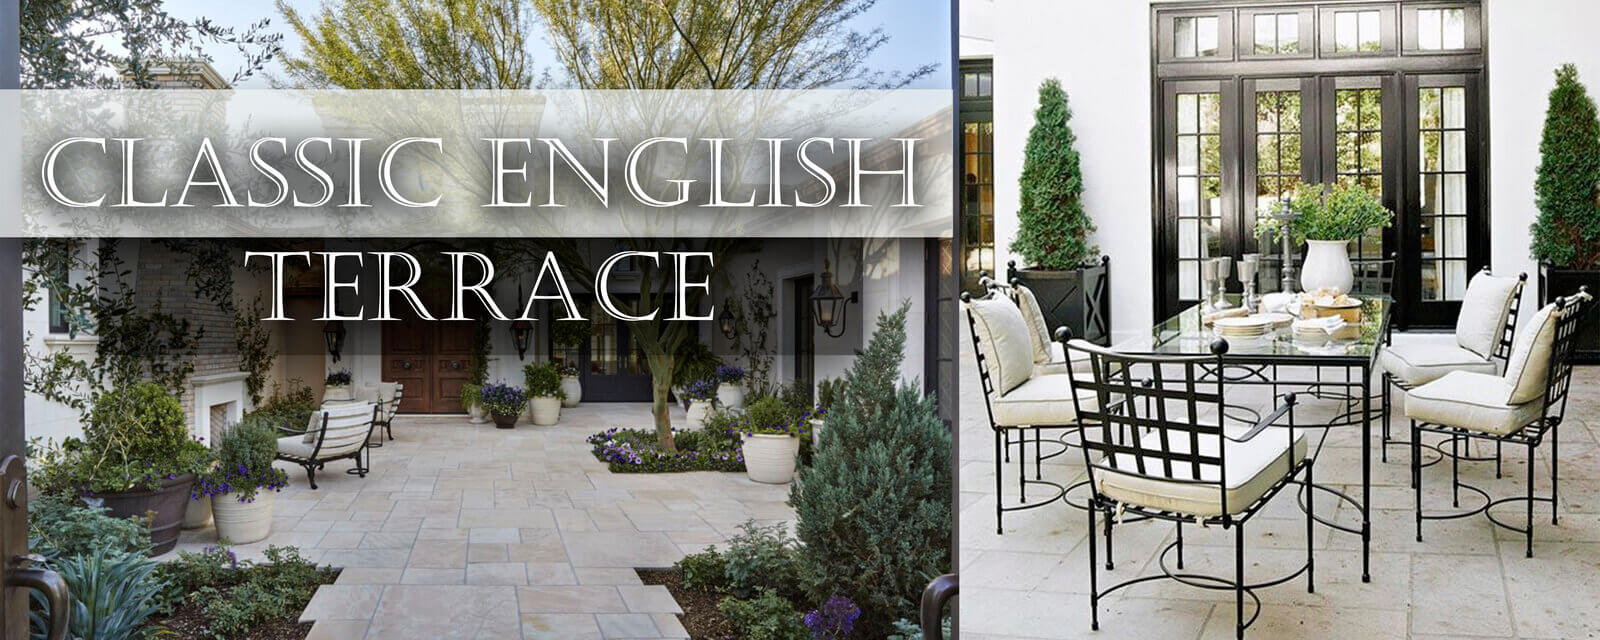 Classic English Terrace